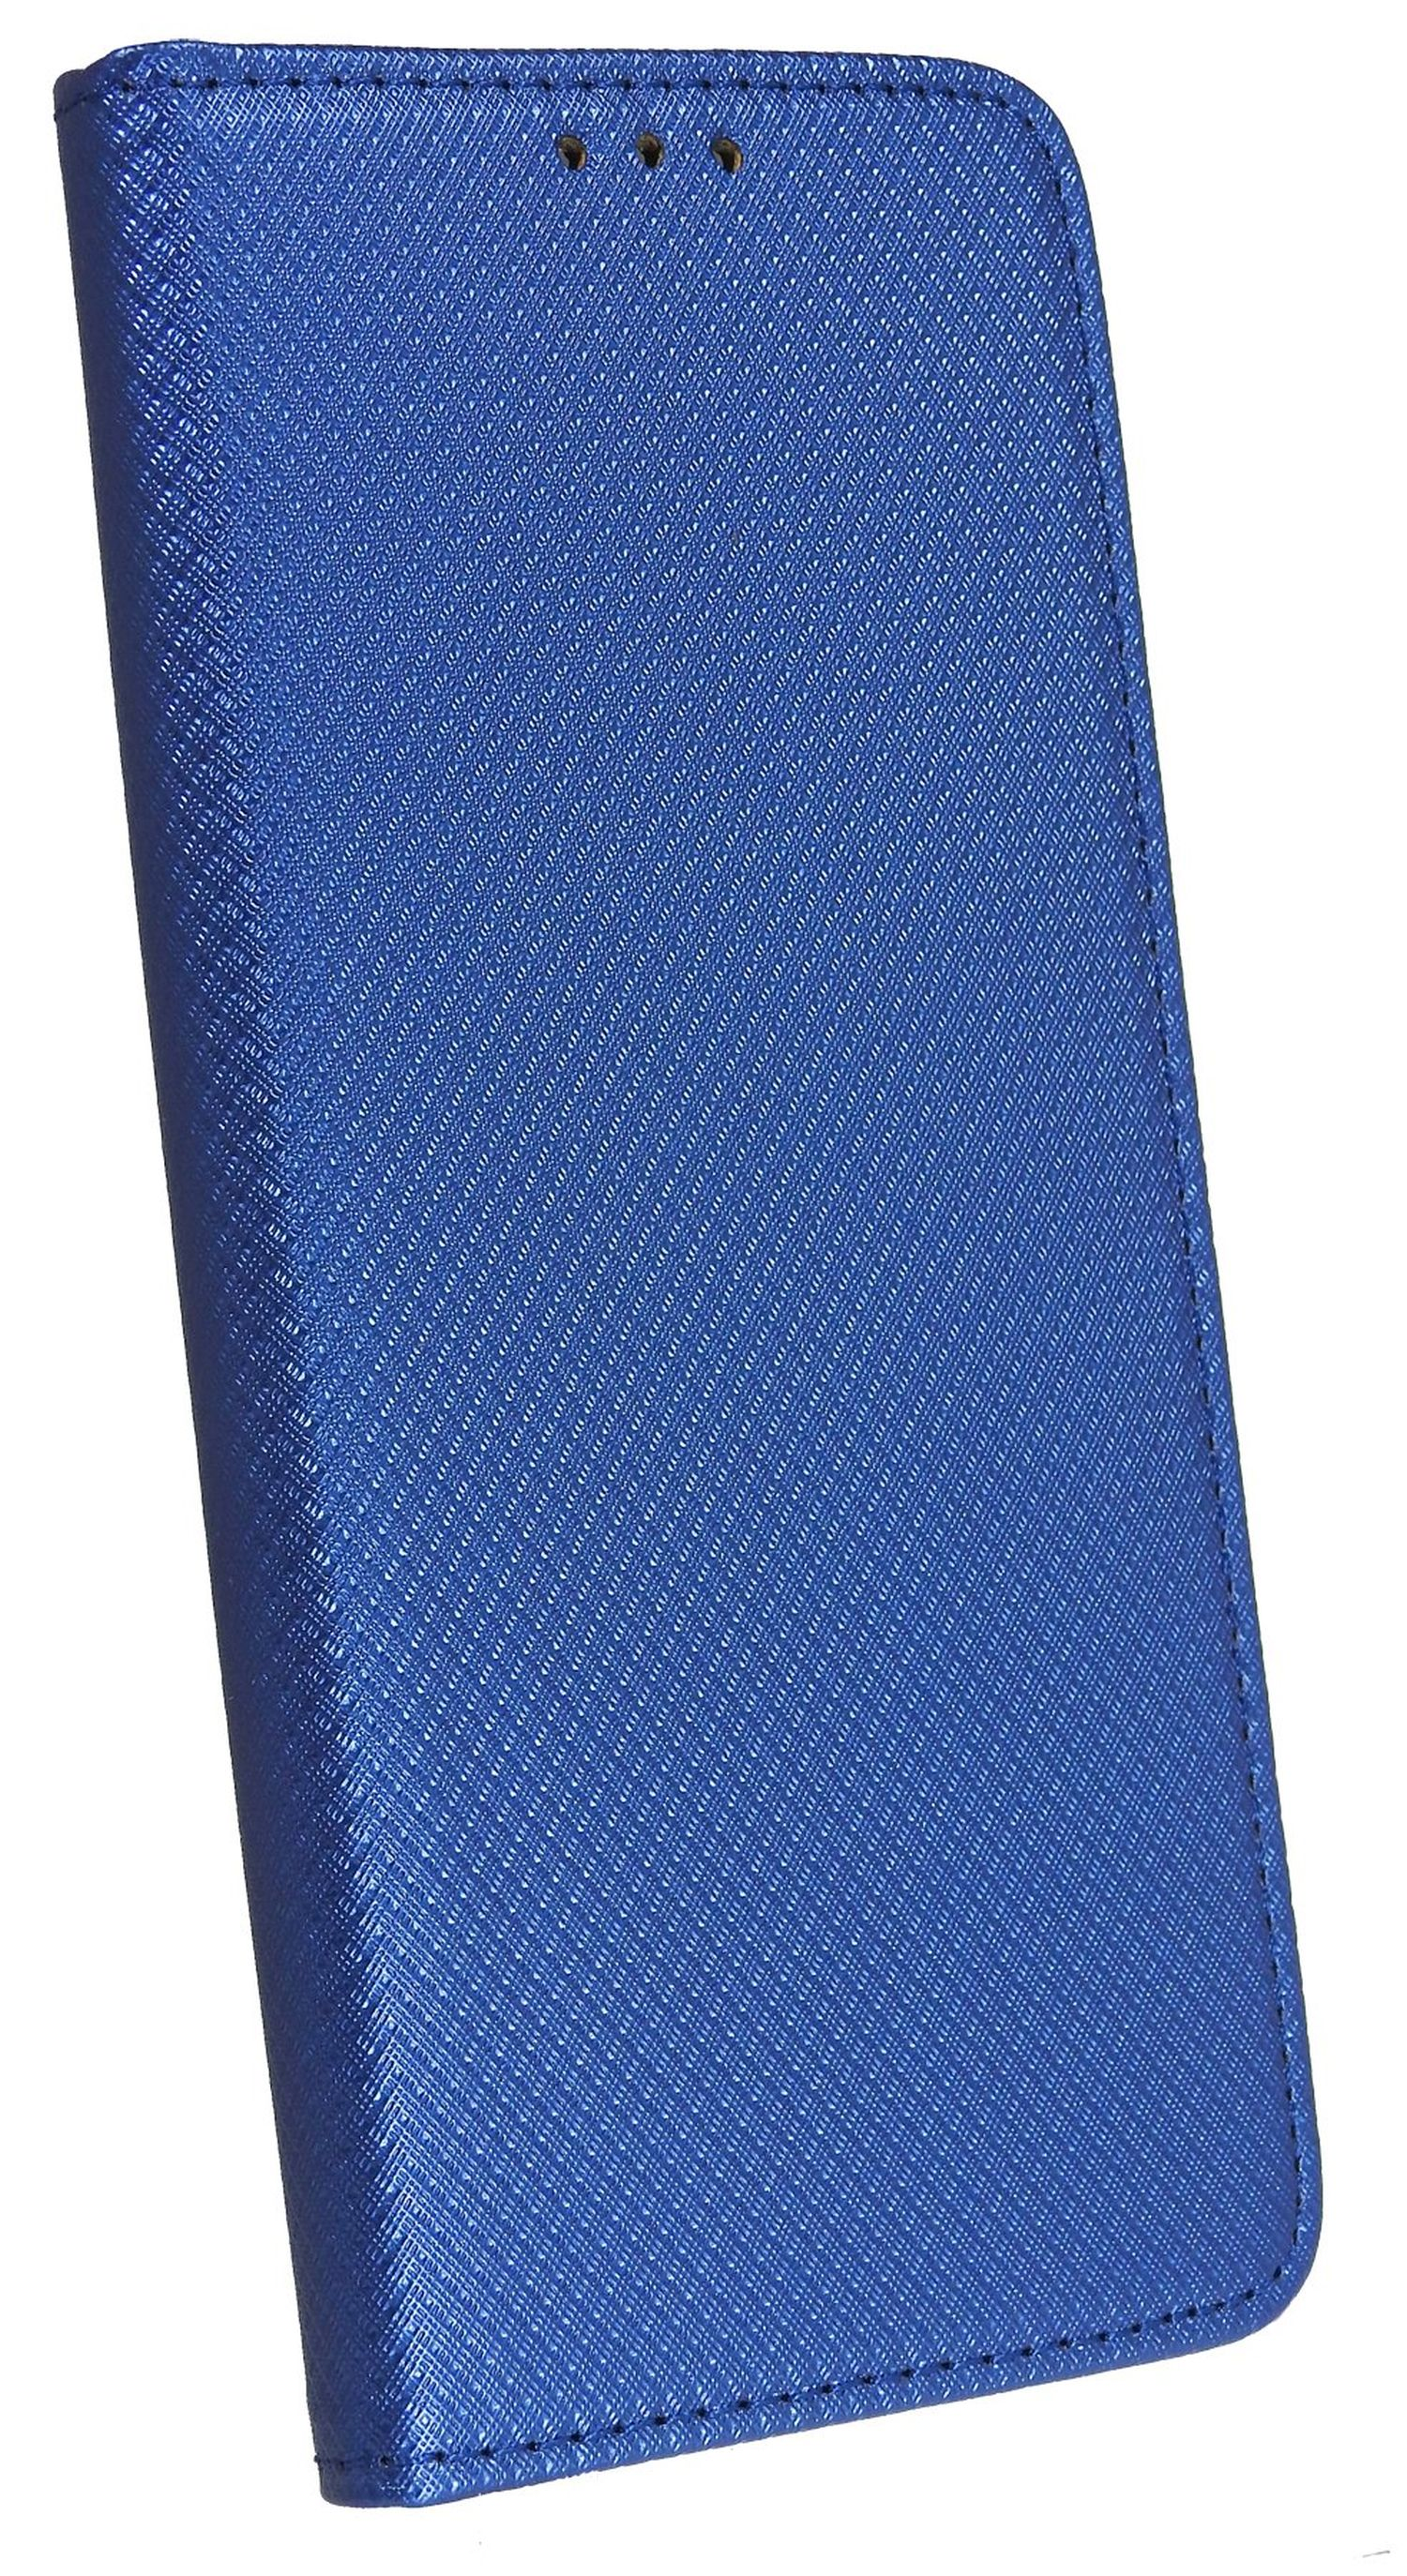 COFI Smart Case, Bookcover, Plus, Moto Blau Motorola, G9